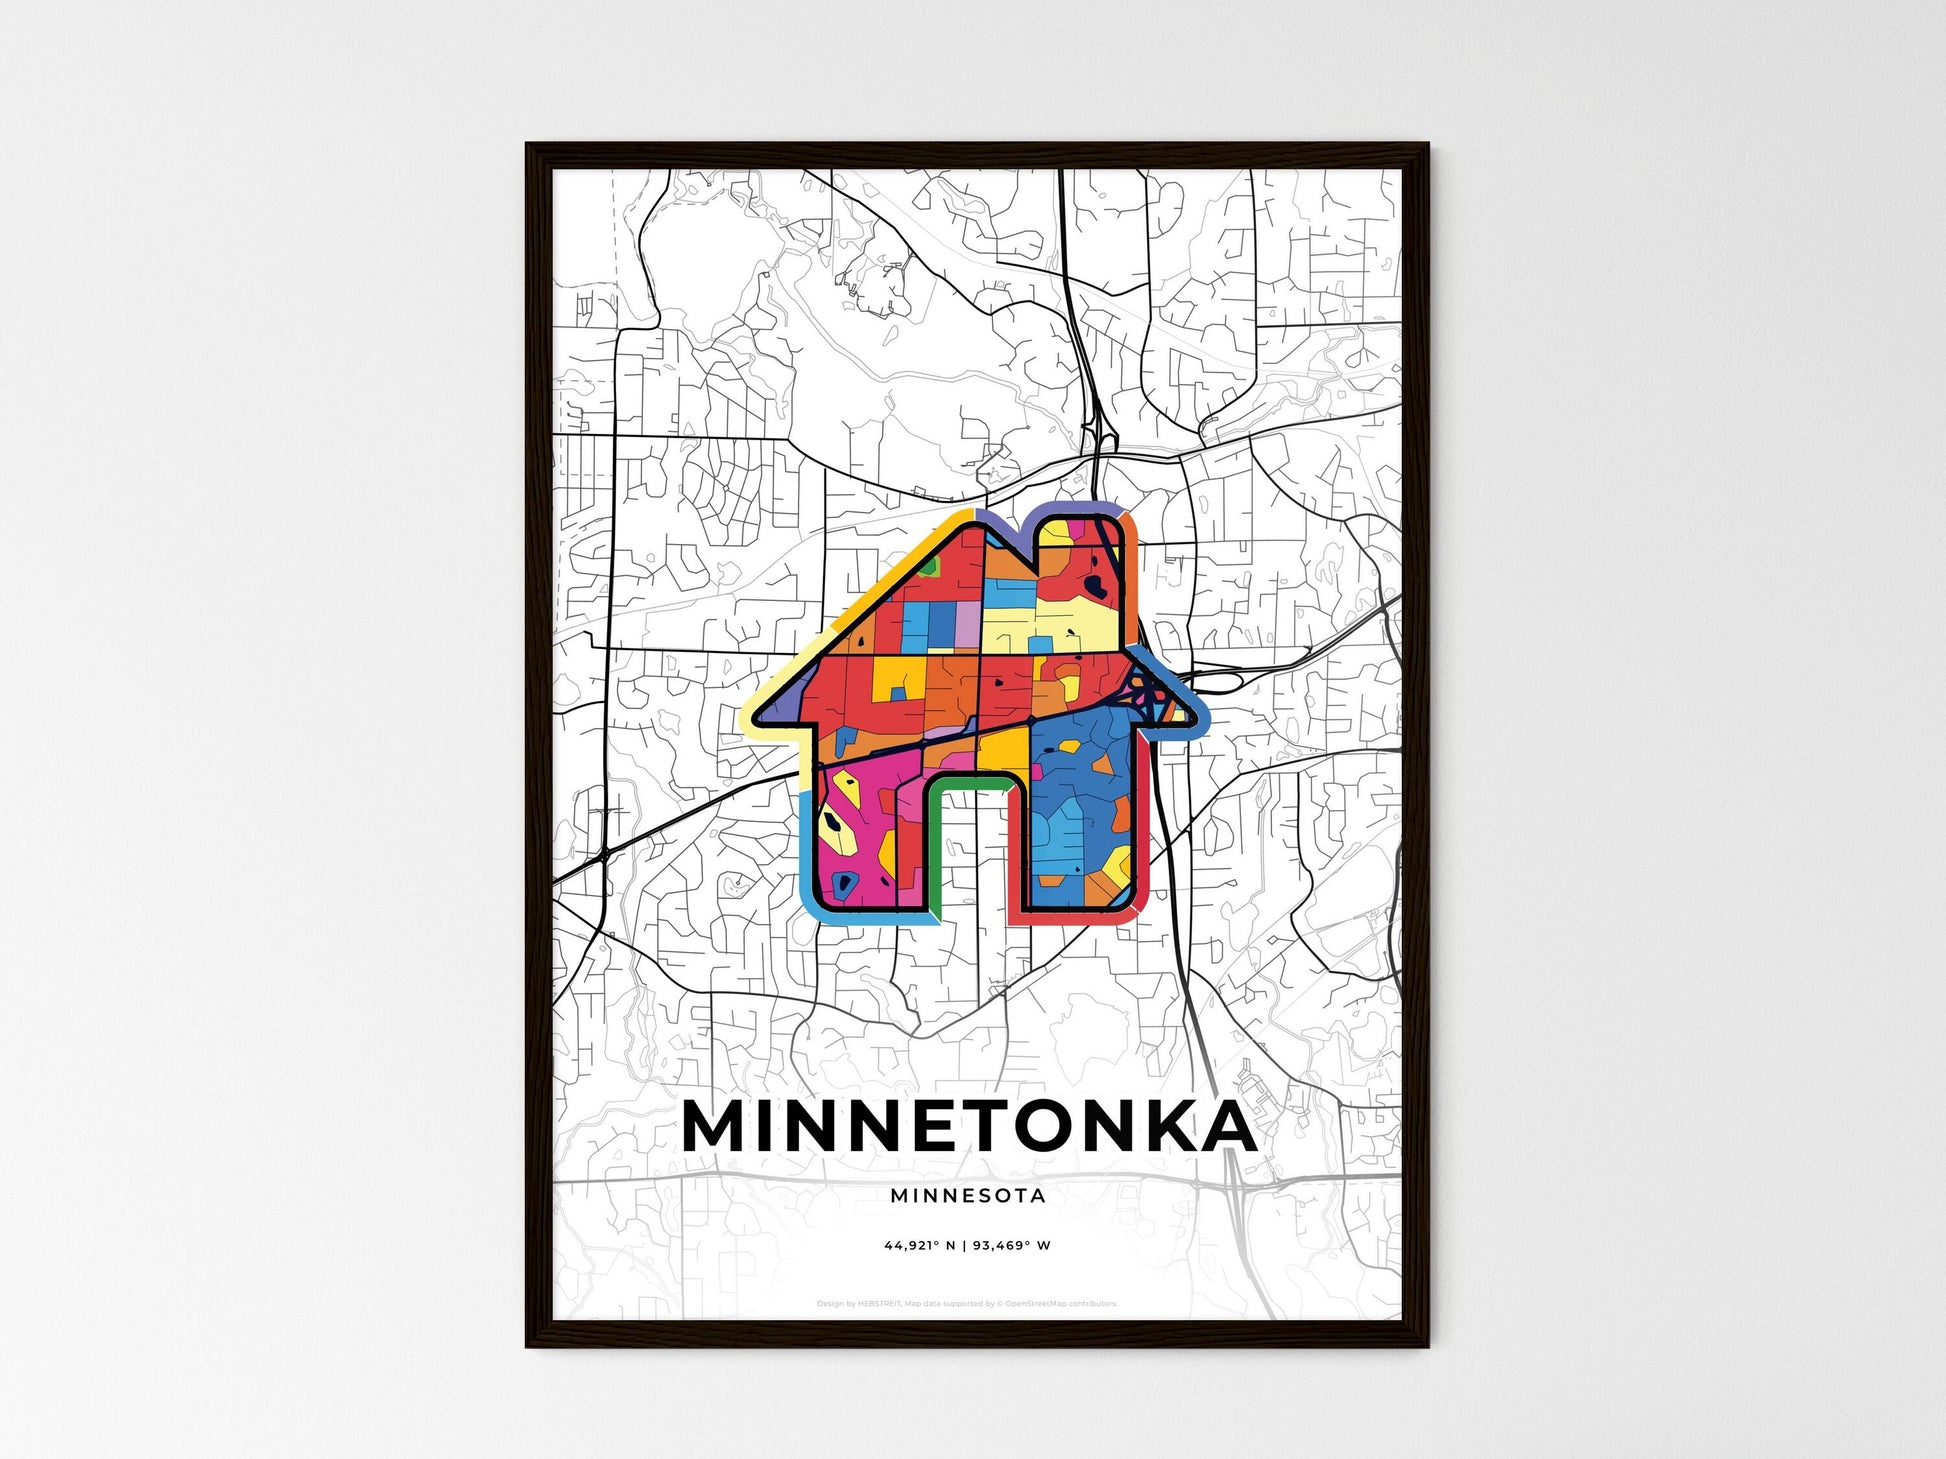 MINNETONKA MINNESOTA minimal art map with a colorful icon. Style 3